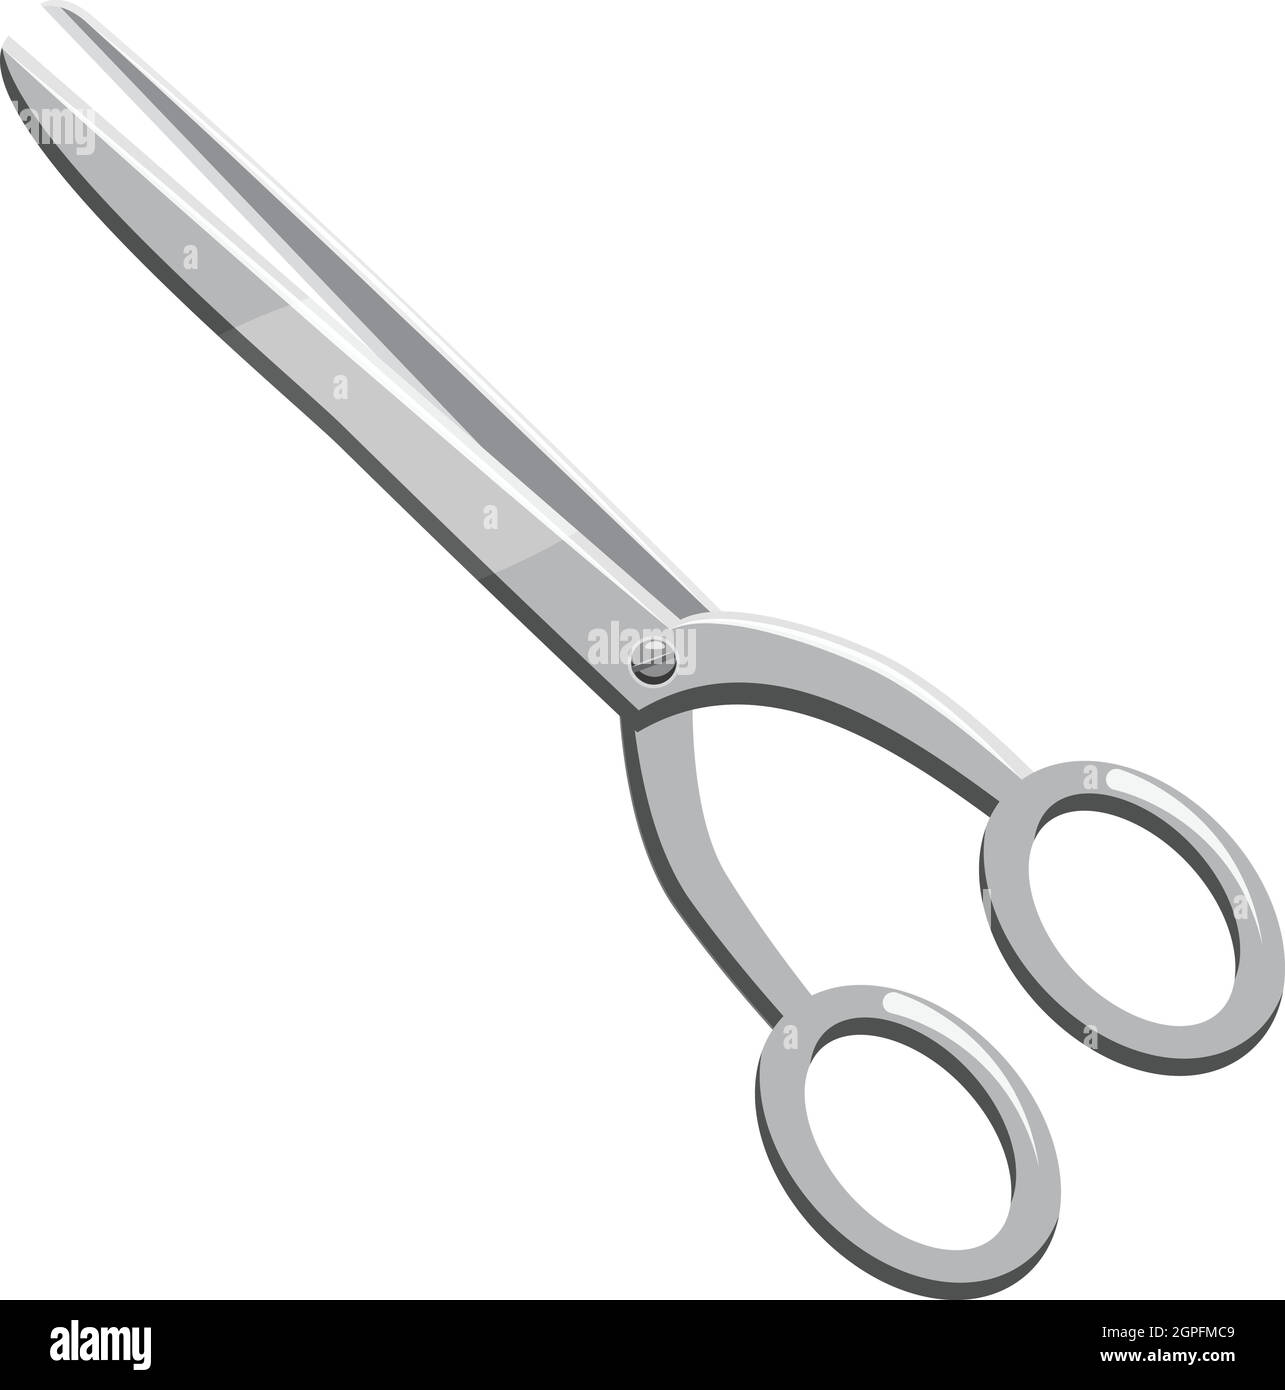 Hair cutting scissors icon, gray monochrome style Stock Vector